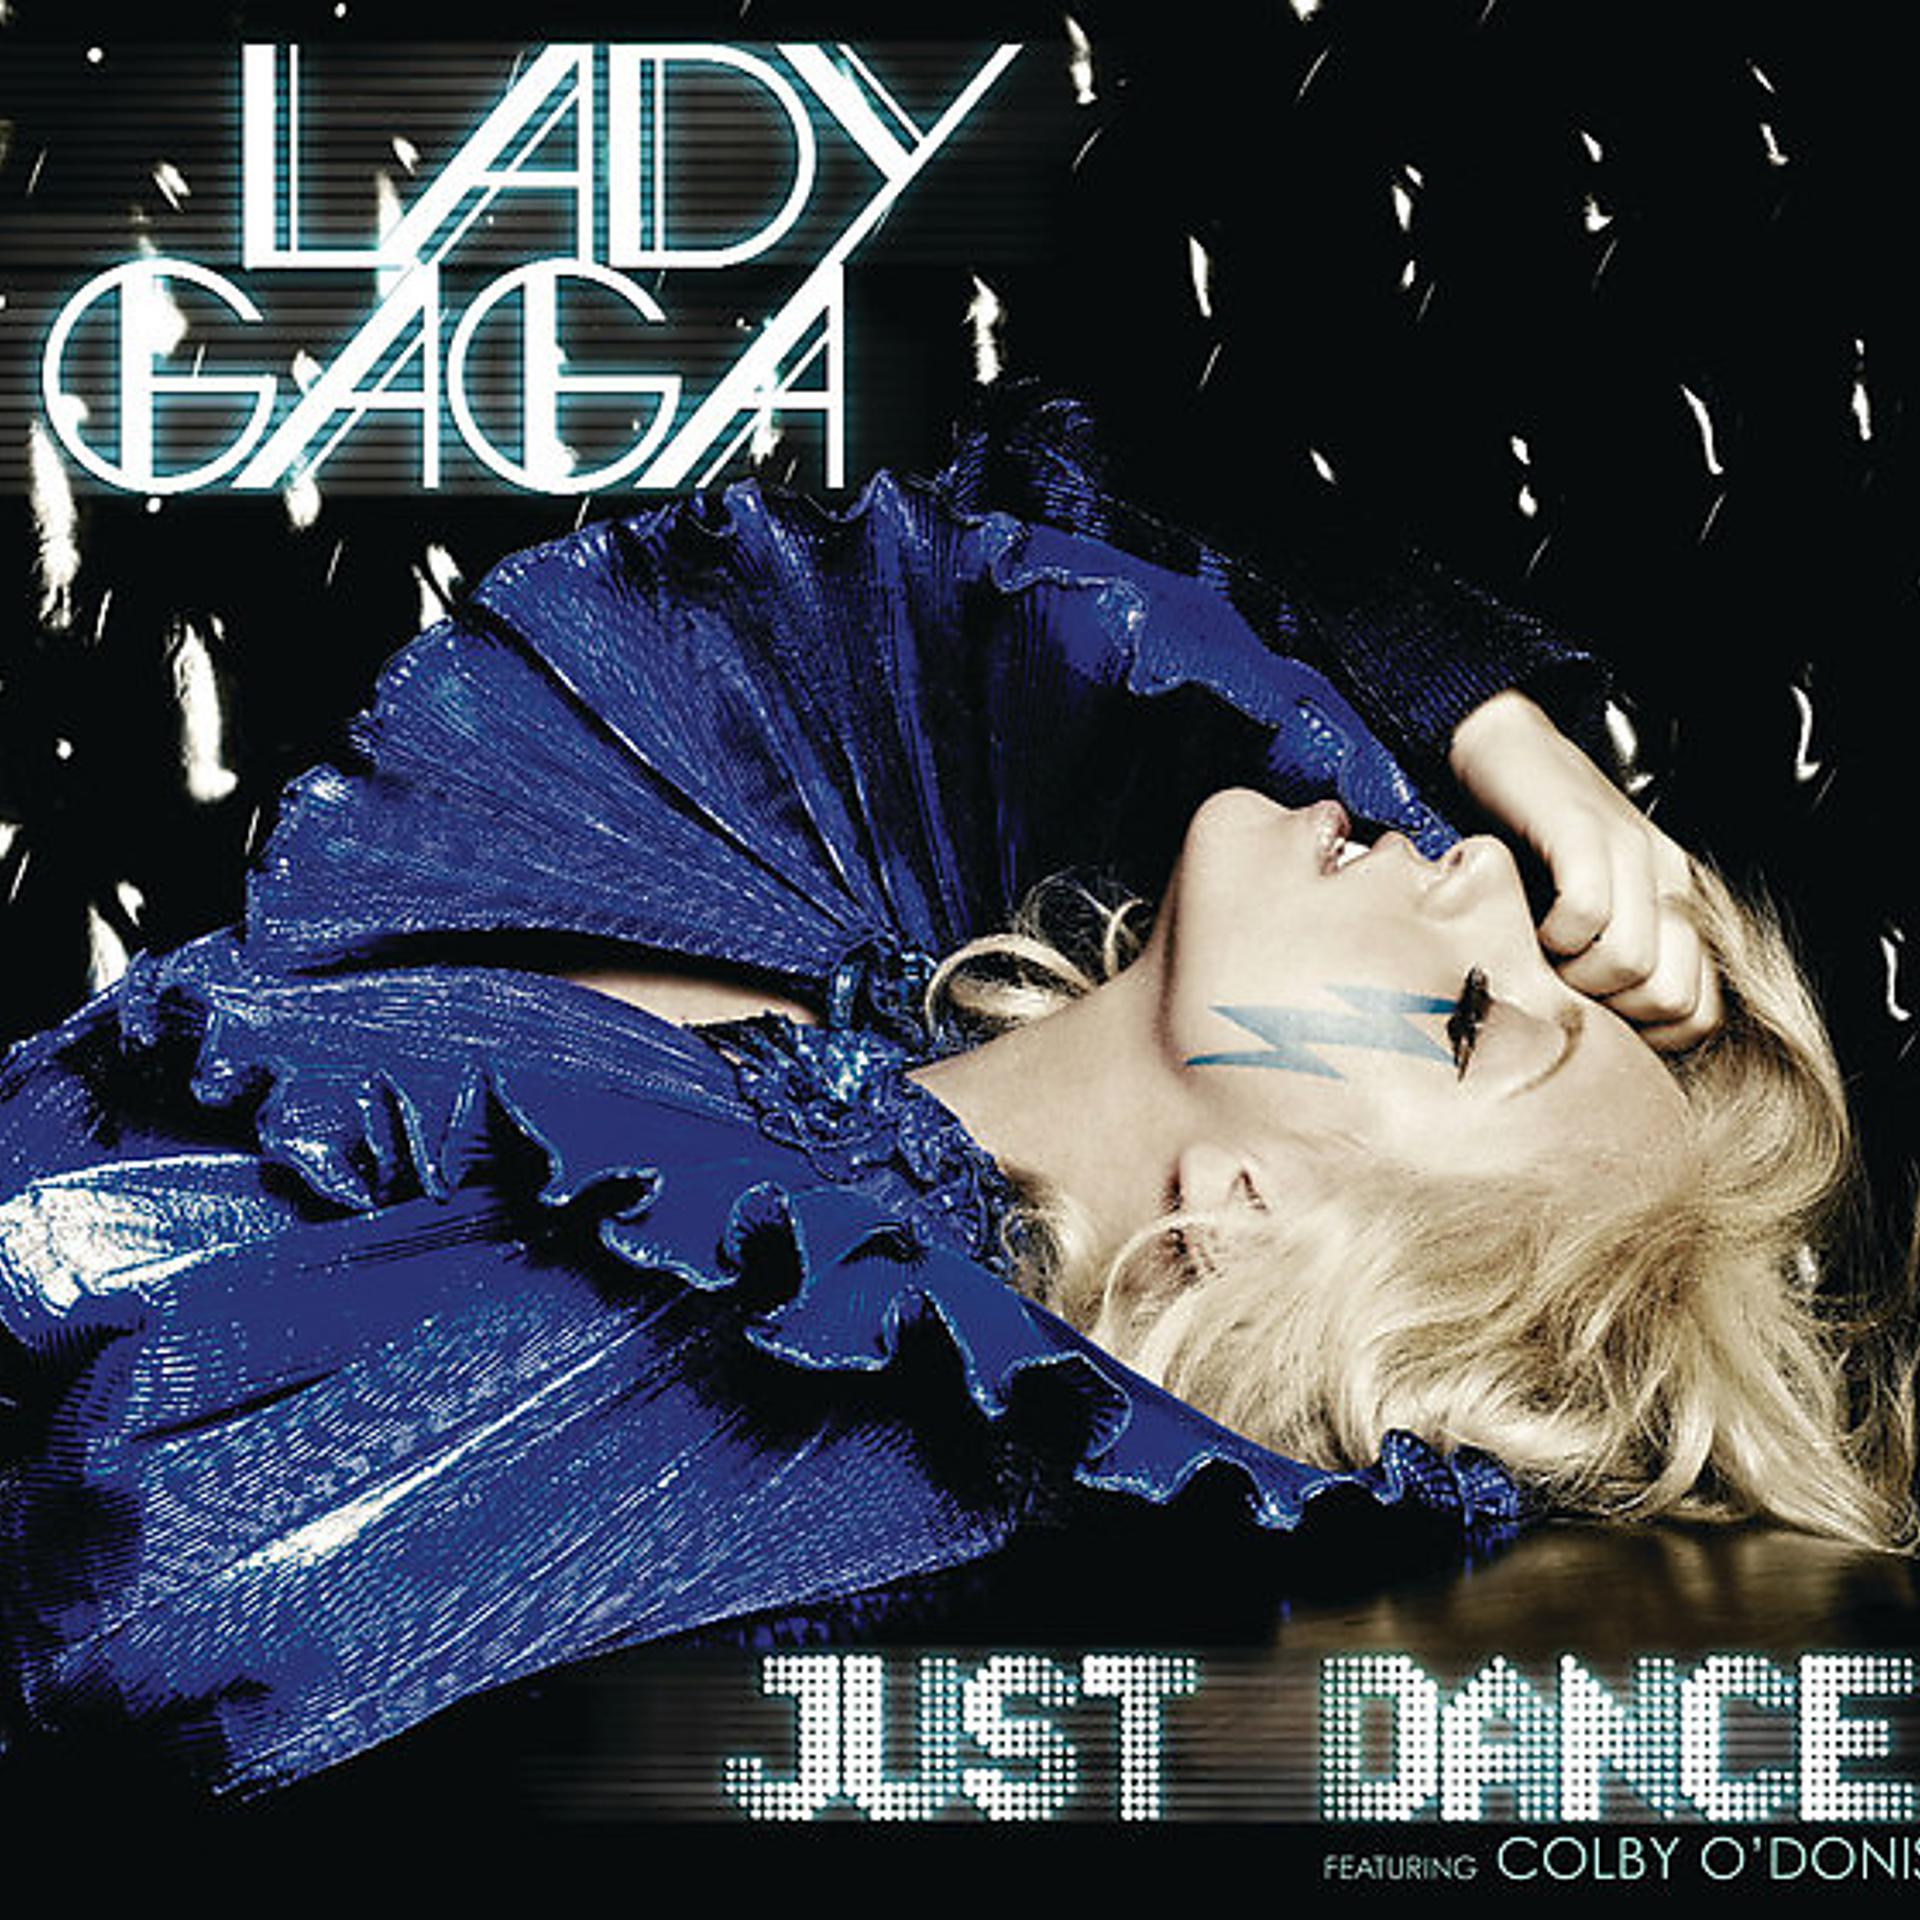 Леди гага танцует. Леди Гага дэнс. Lady Gaga just Dance обложка. Just Dance Колби одонис. Just Dance леди Гага сингл.